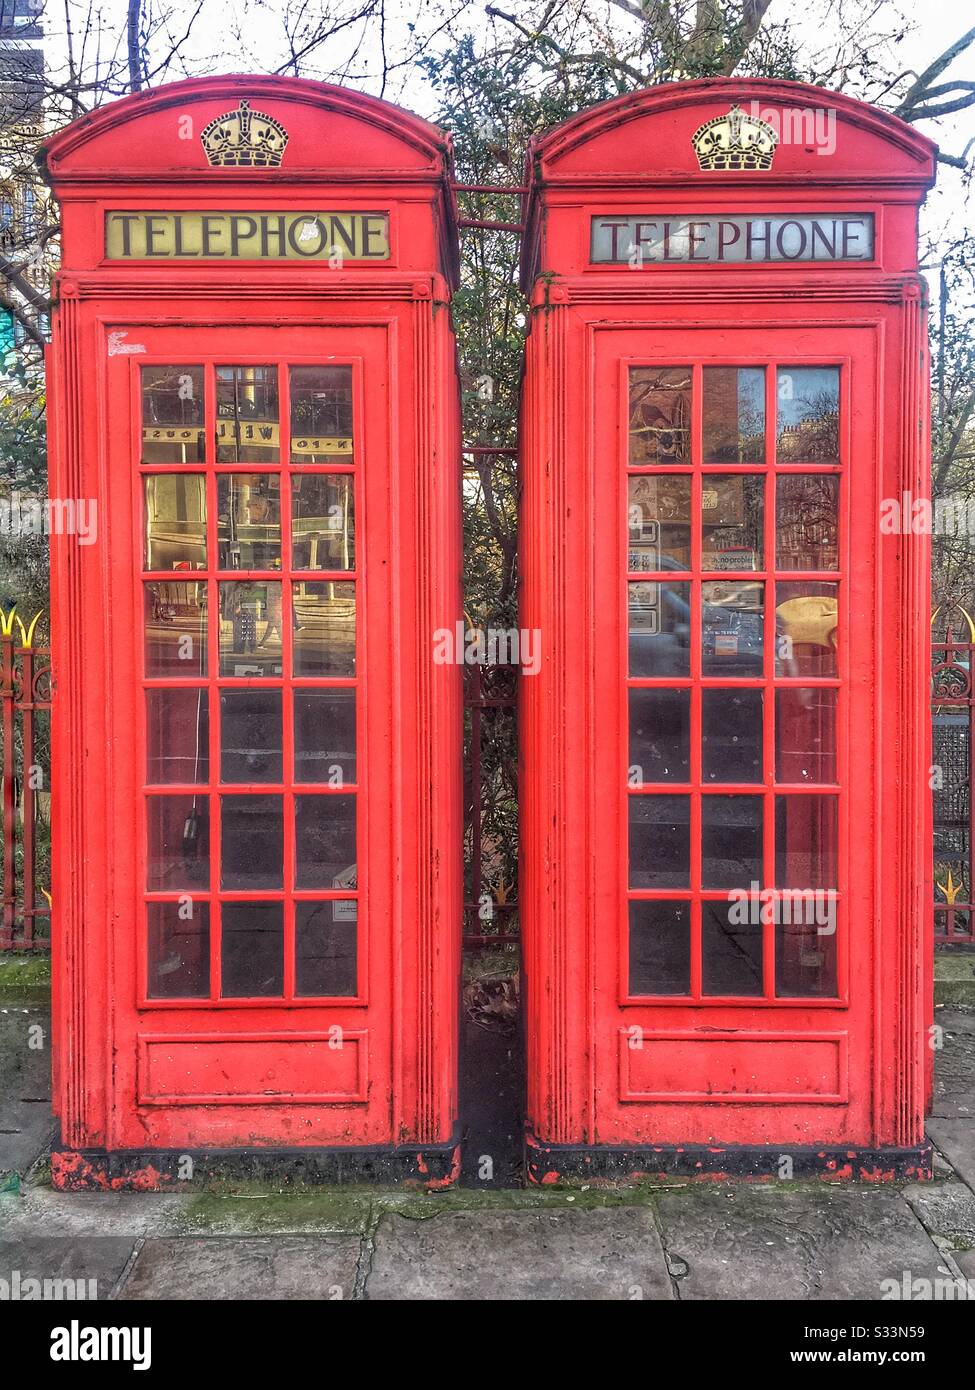 London telephone kiosks Stock Photo